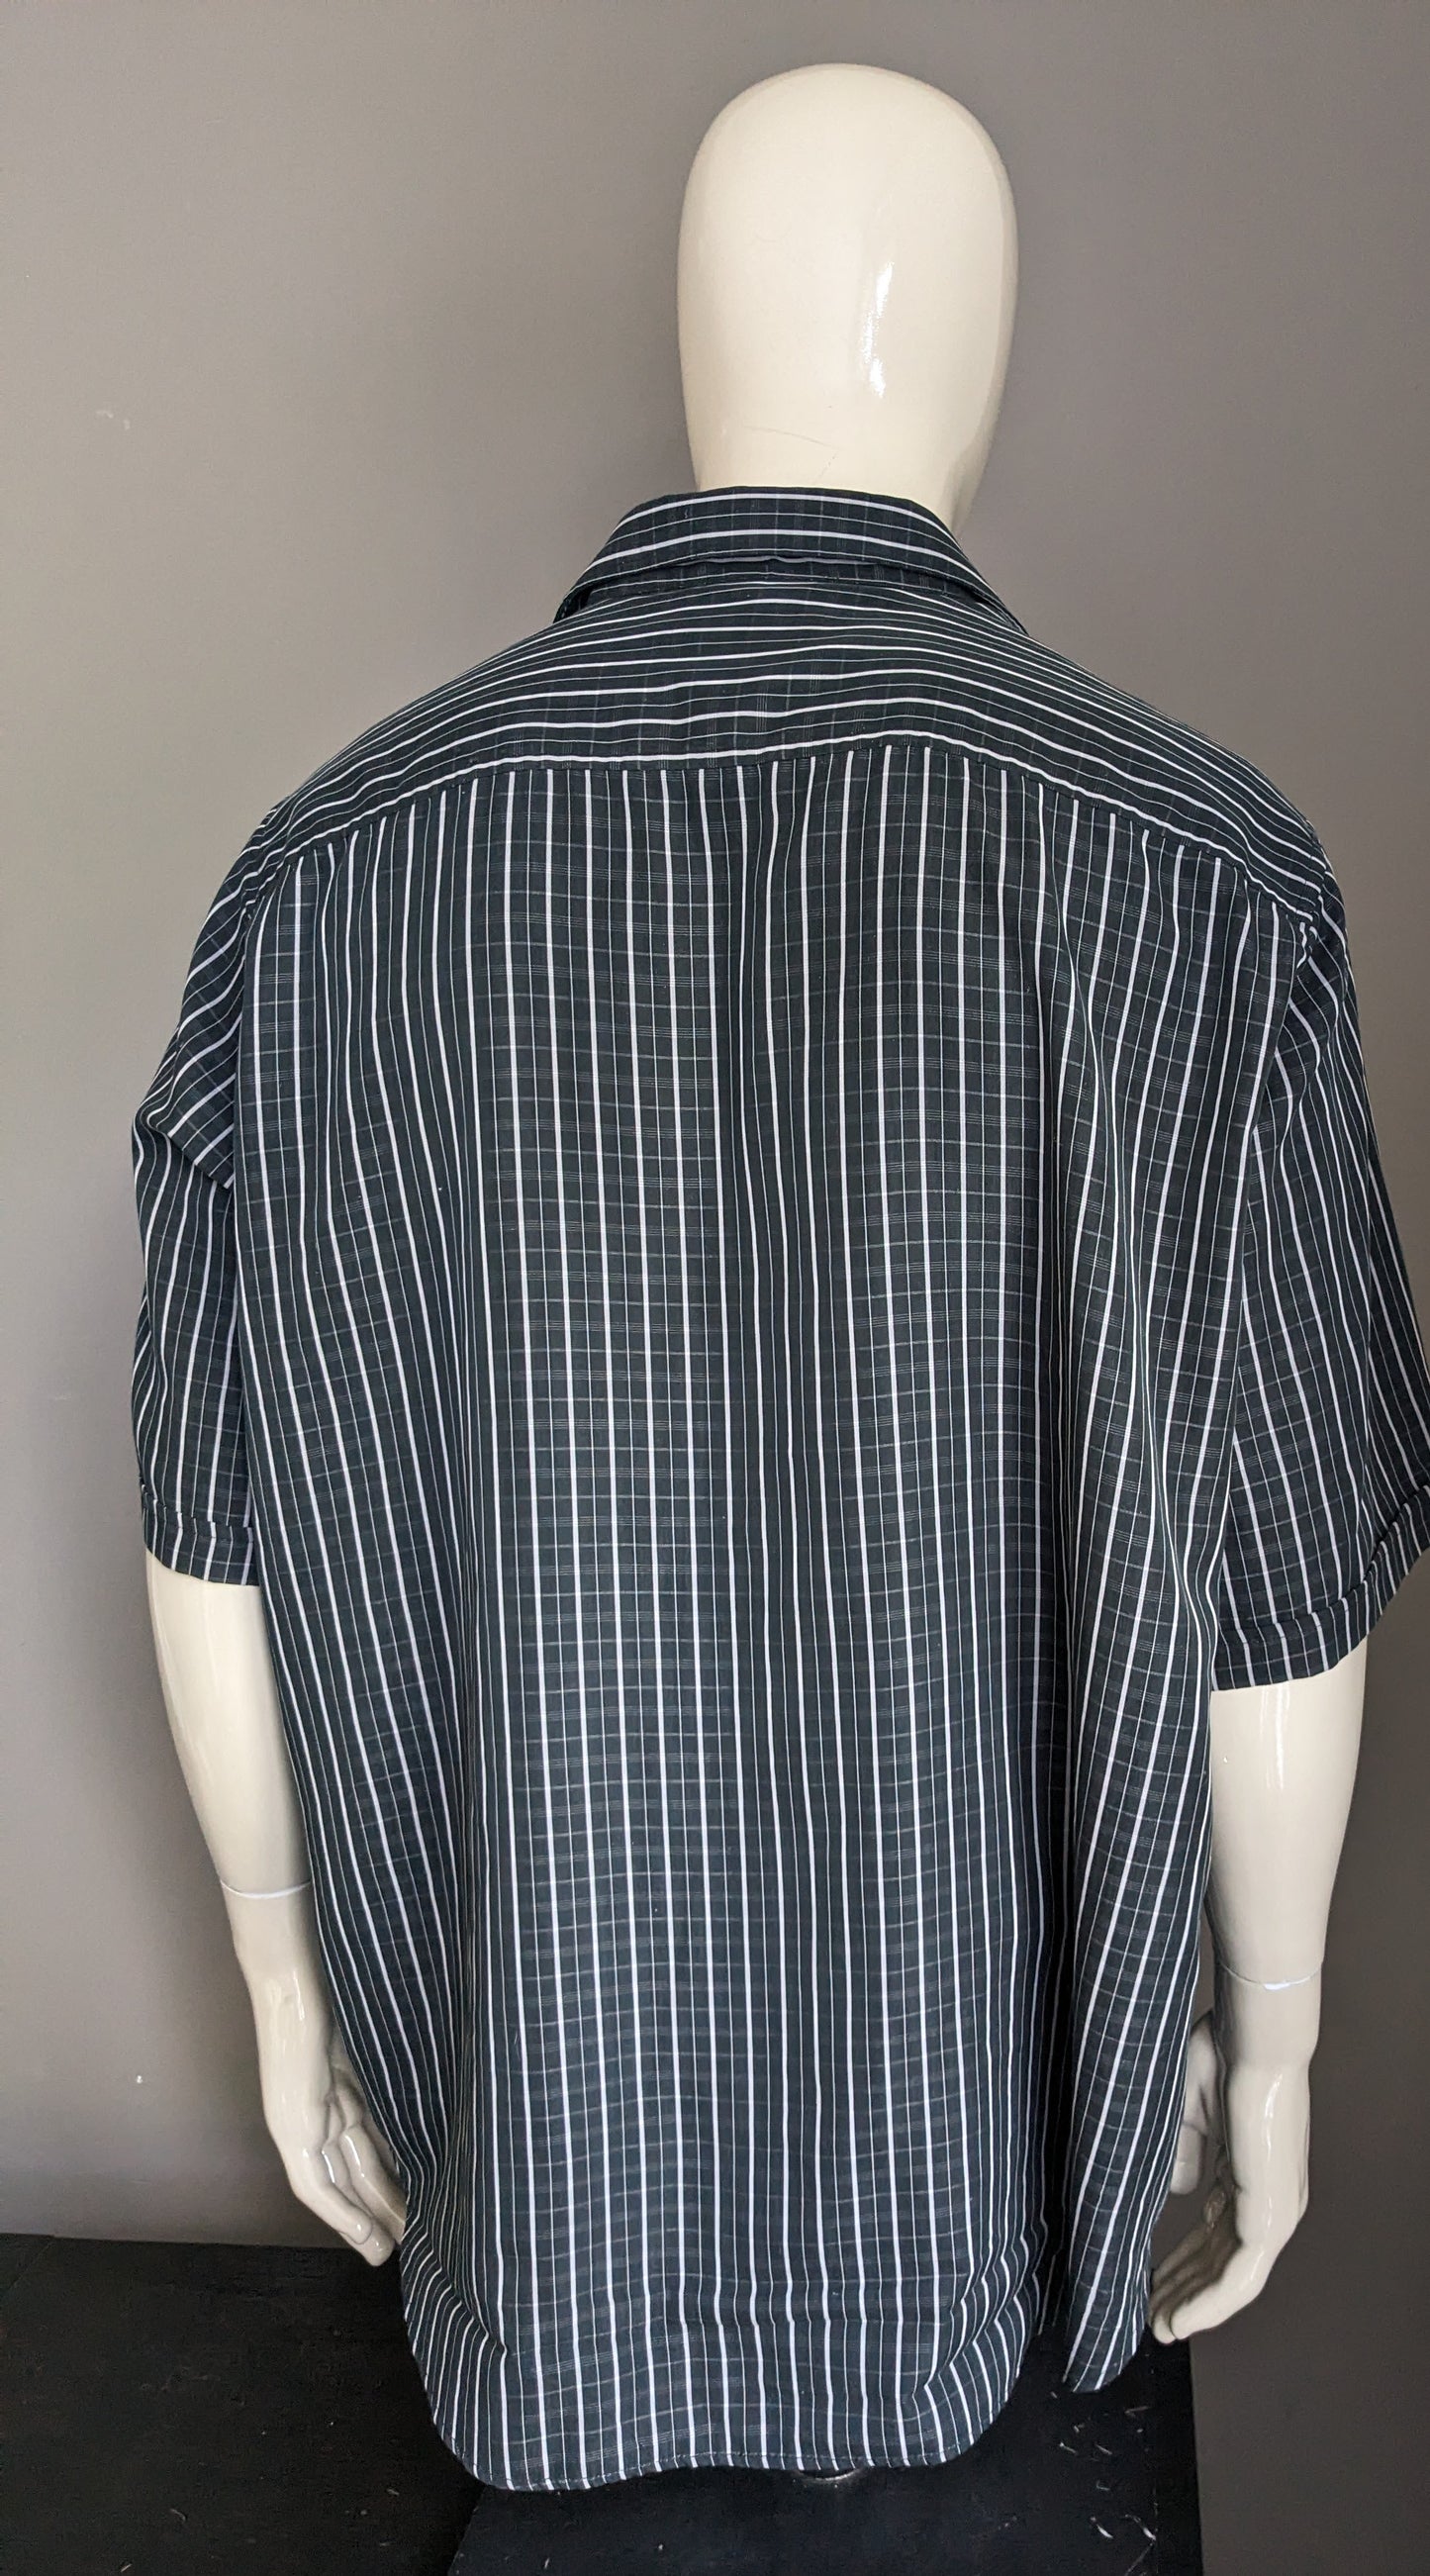 F&F Shirt short sleeve. Black gray checkered. Size XXXL / 3XL.